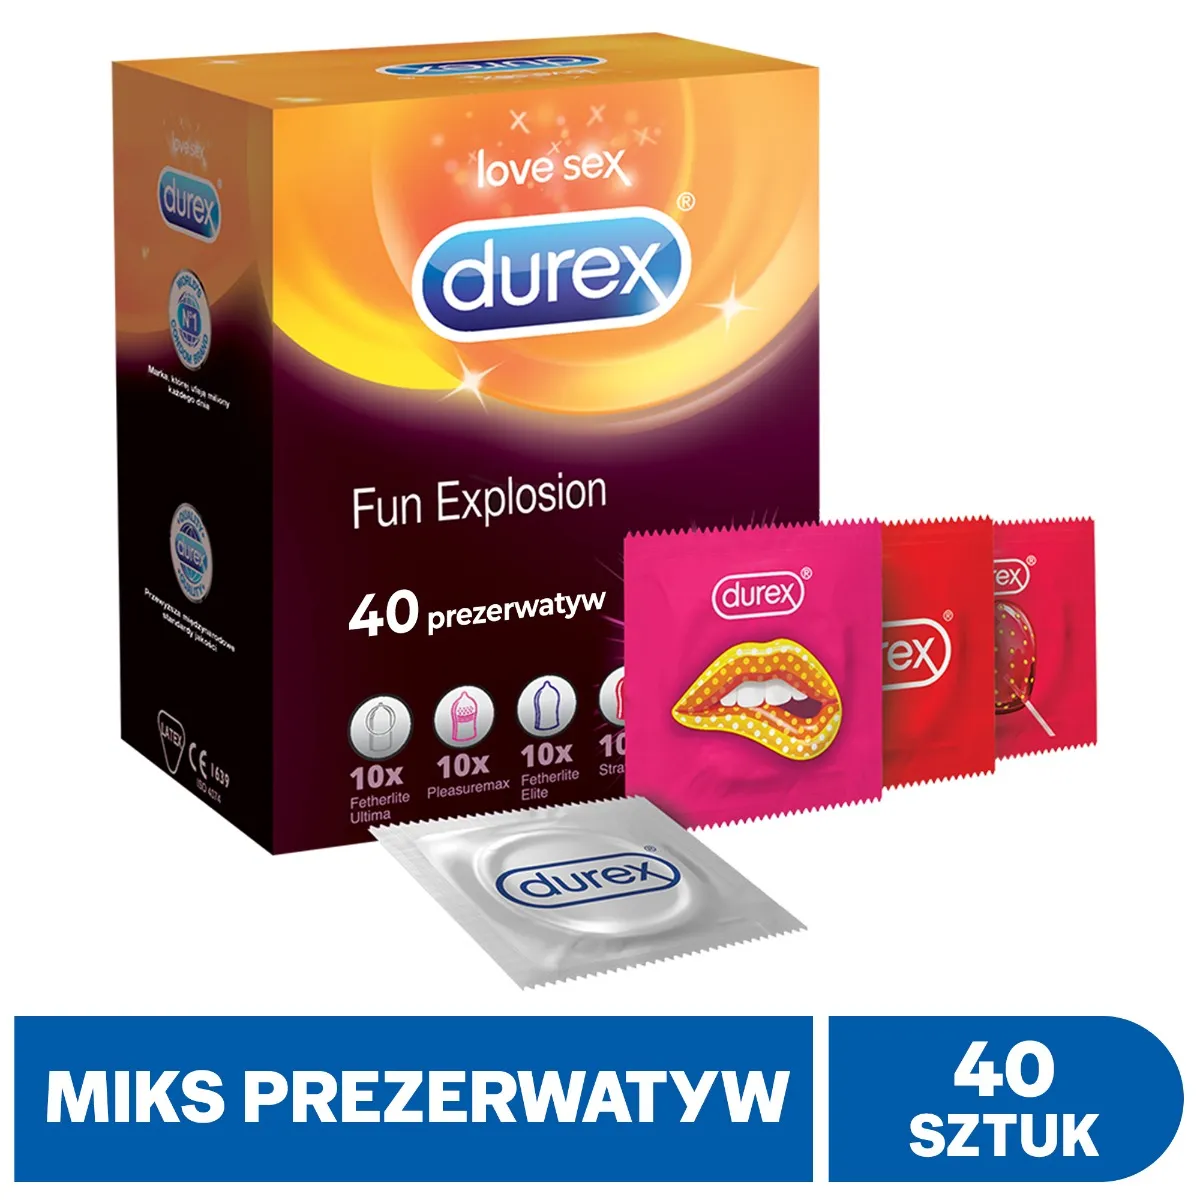 Durex Fun Explosion, prezerwatywy, 40 sztuk